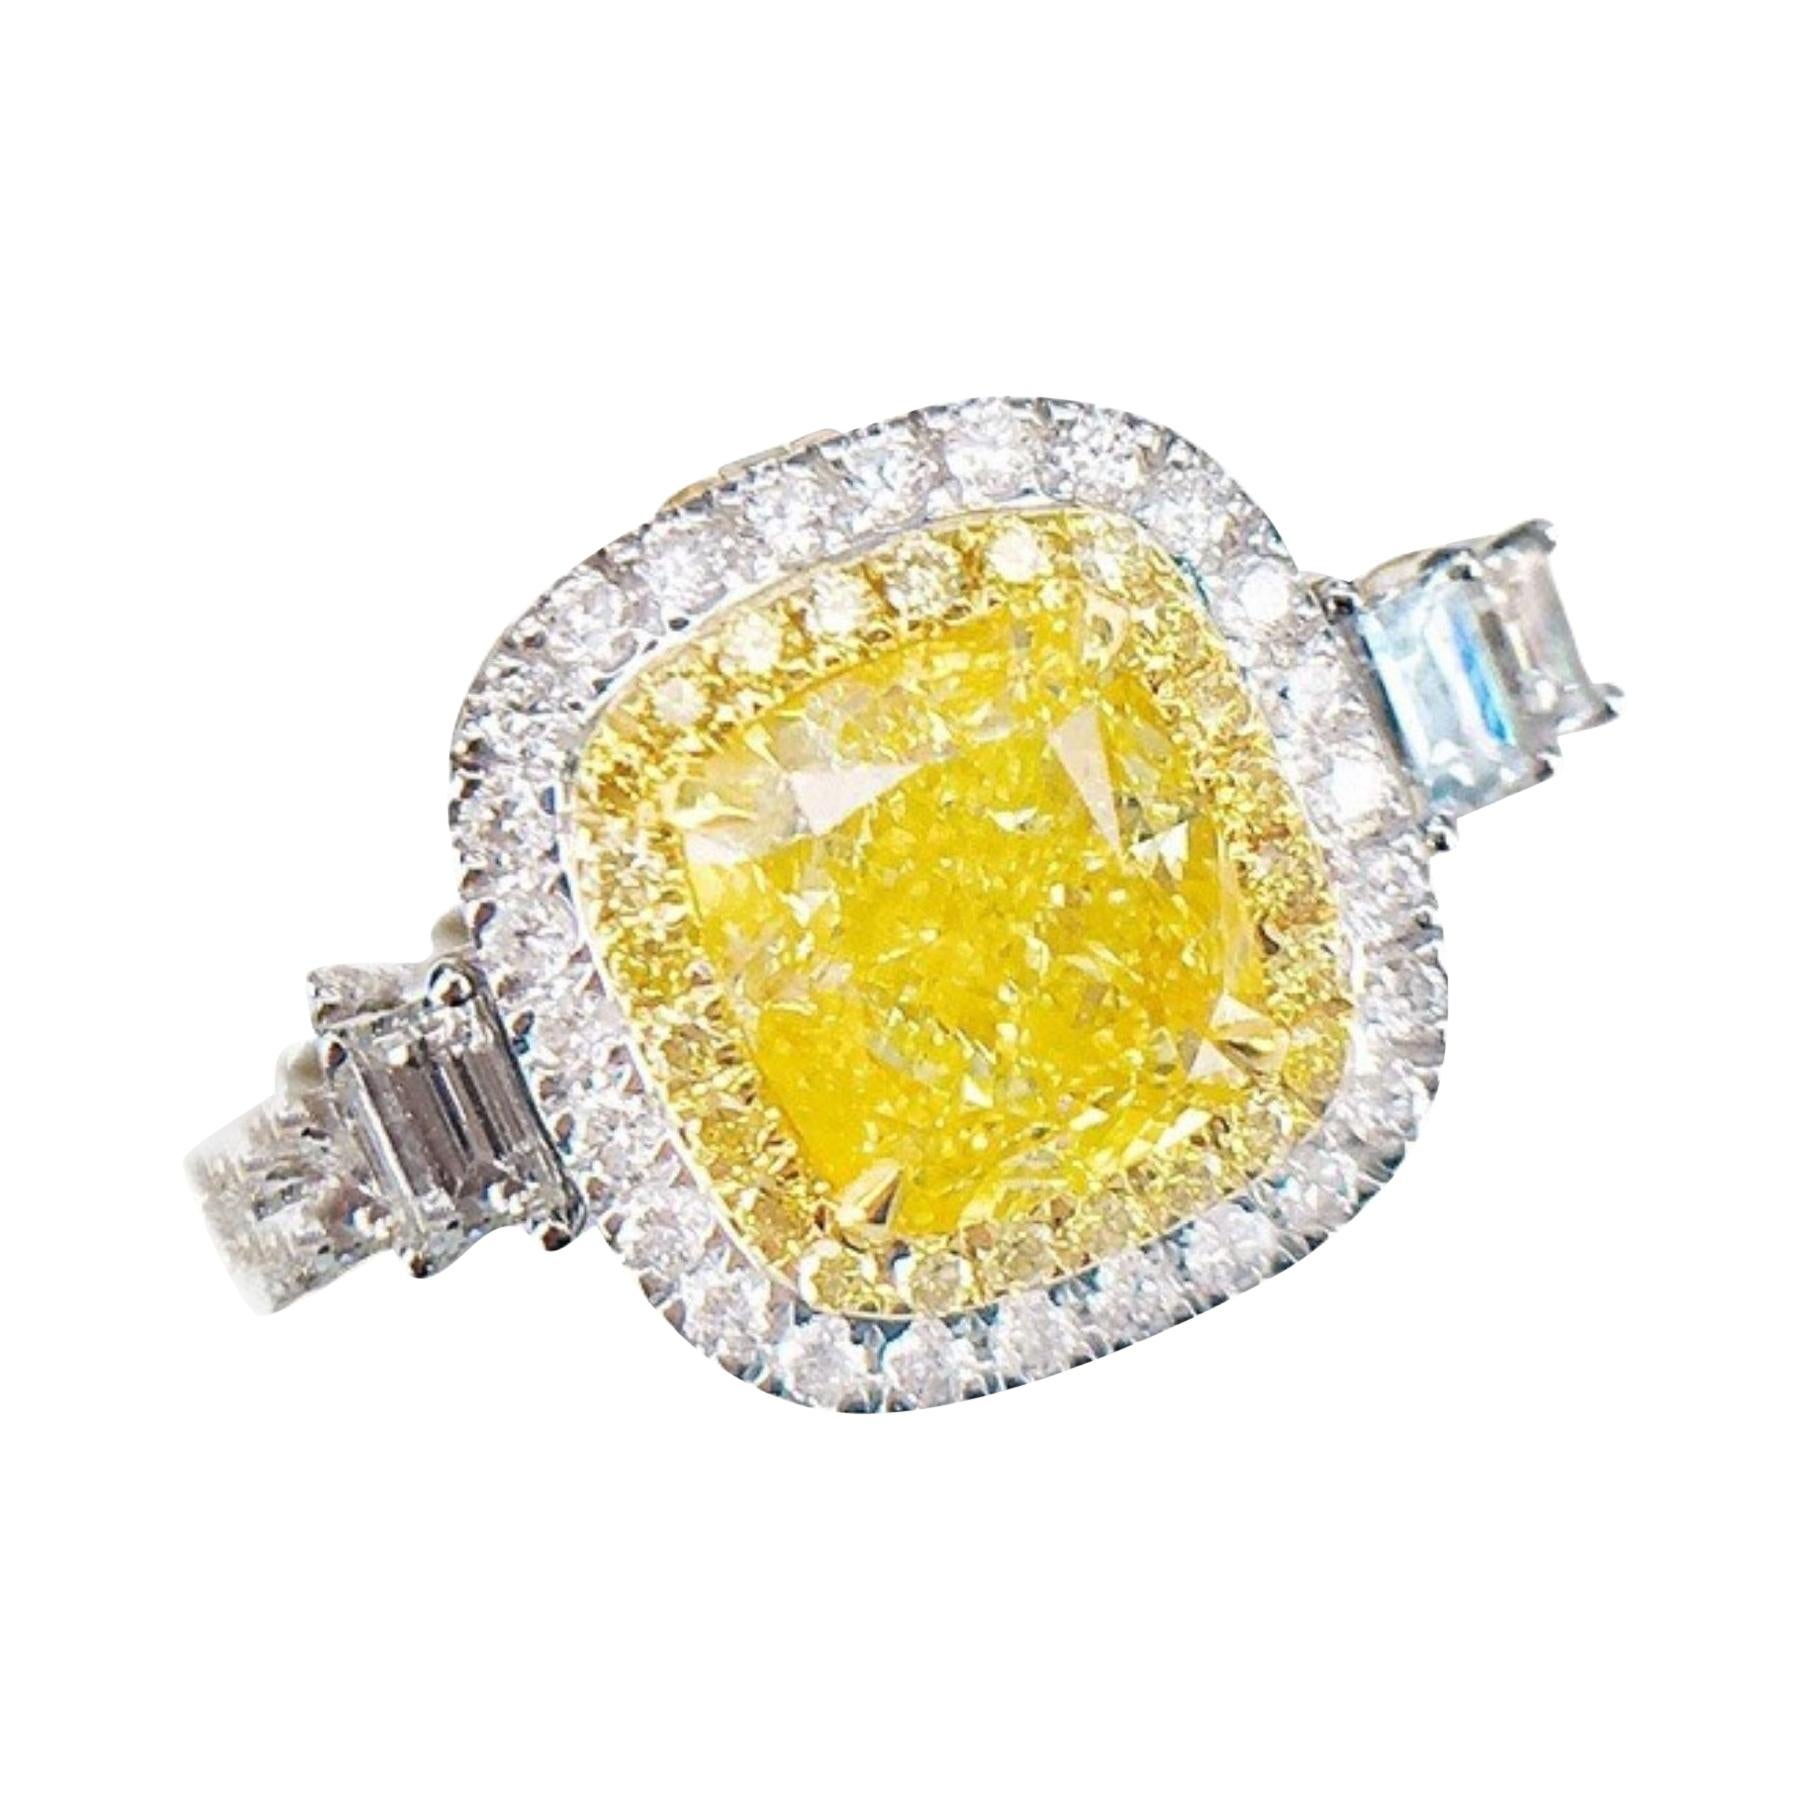 1.52 Carat Fancy Yellow Diamond Ring 18K White Gold For Sale